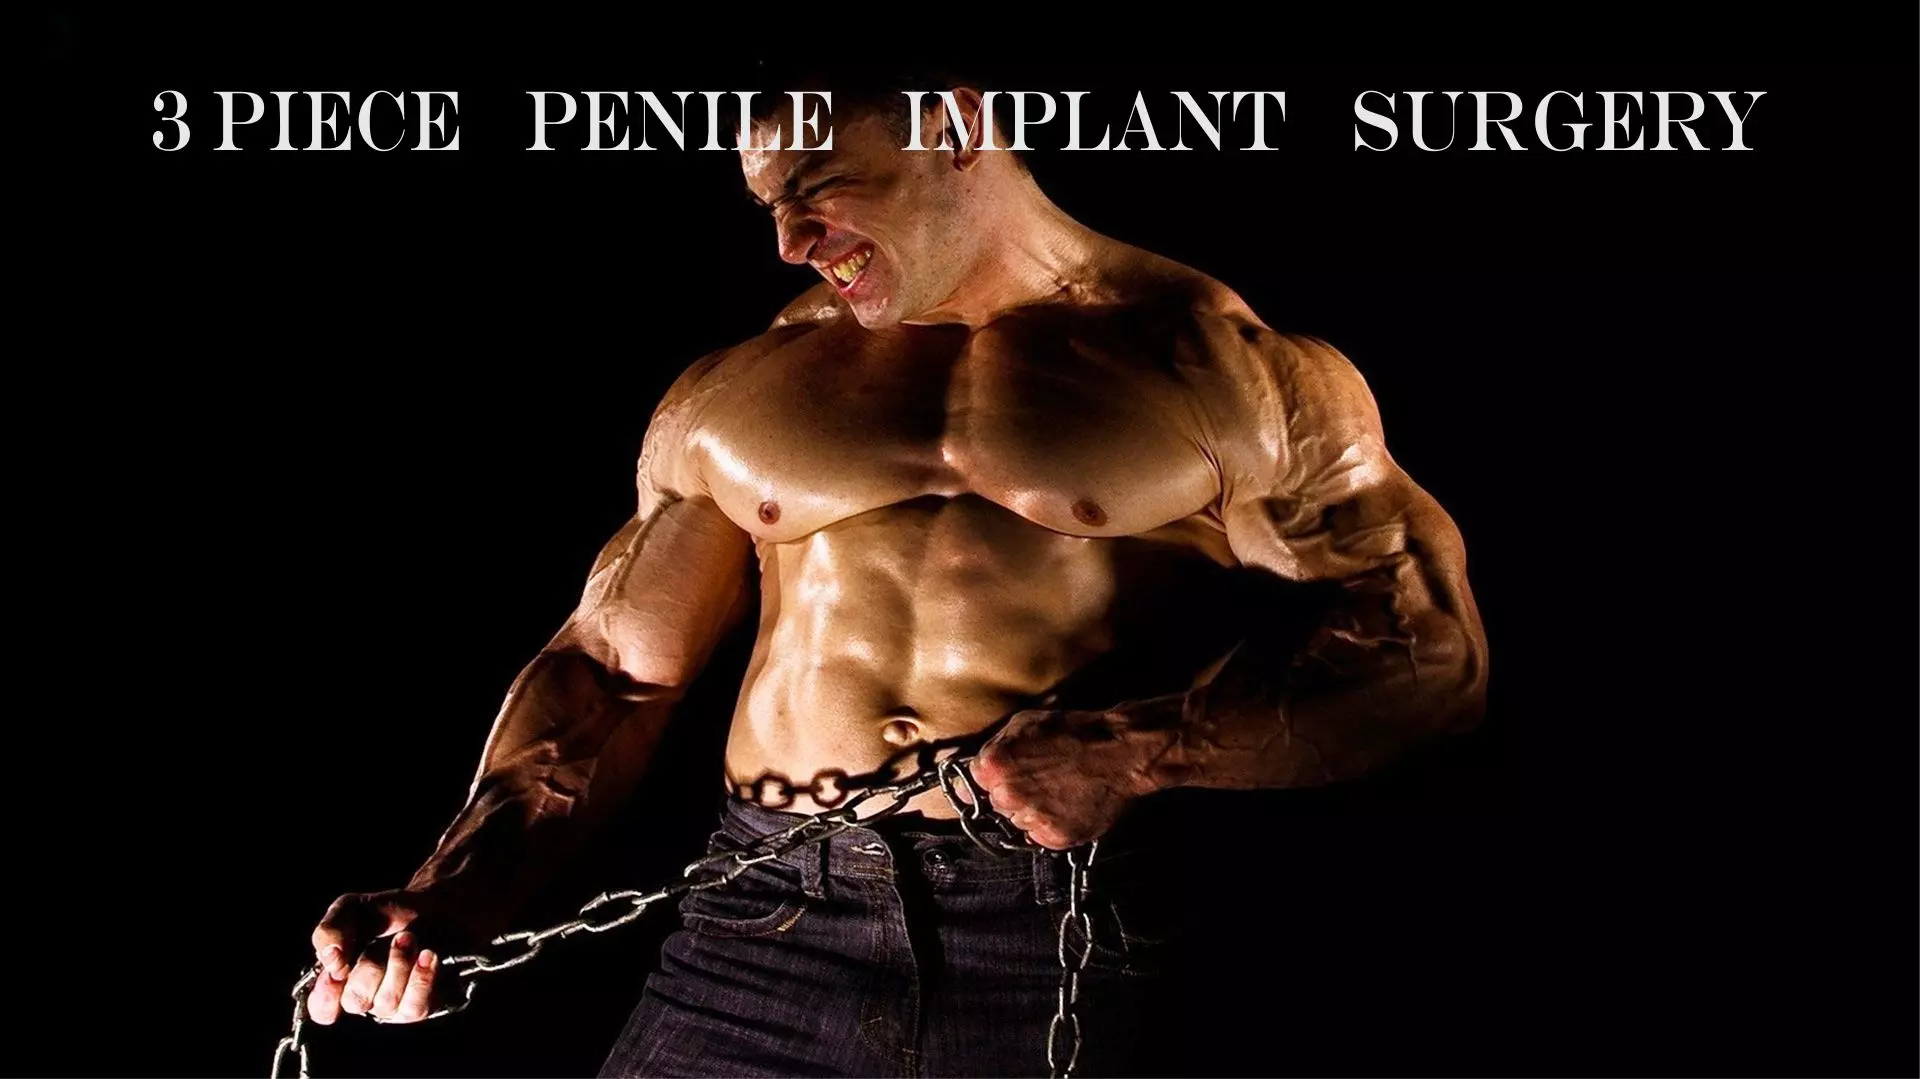 3 Piece Penile Implant Surgery